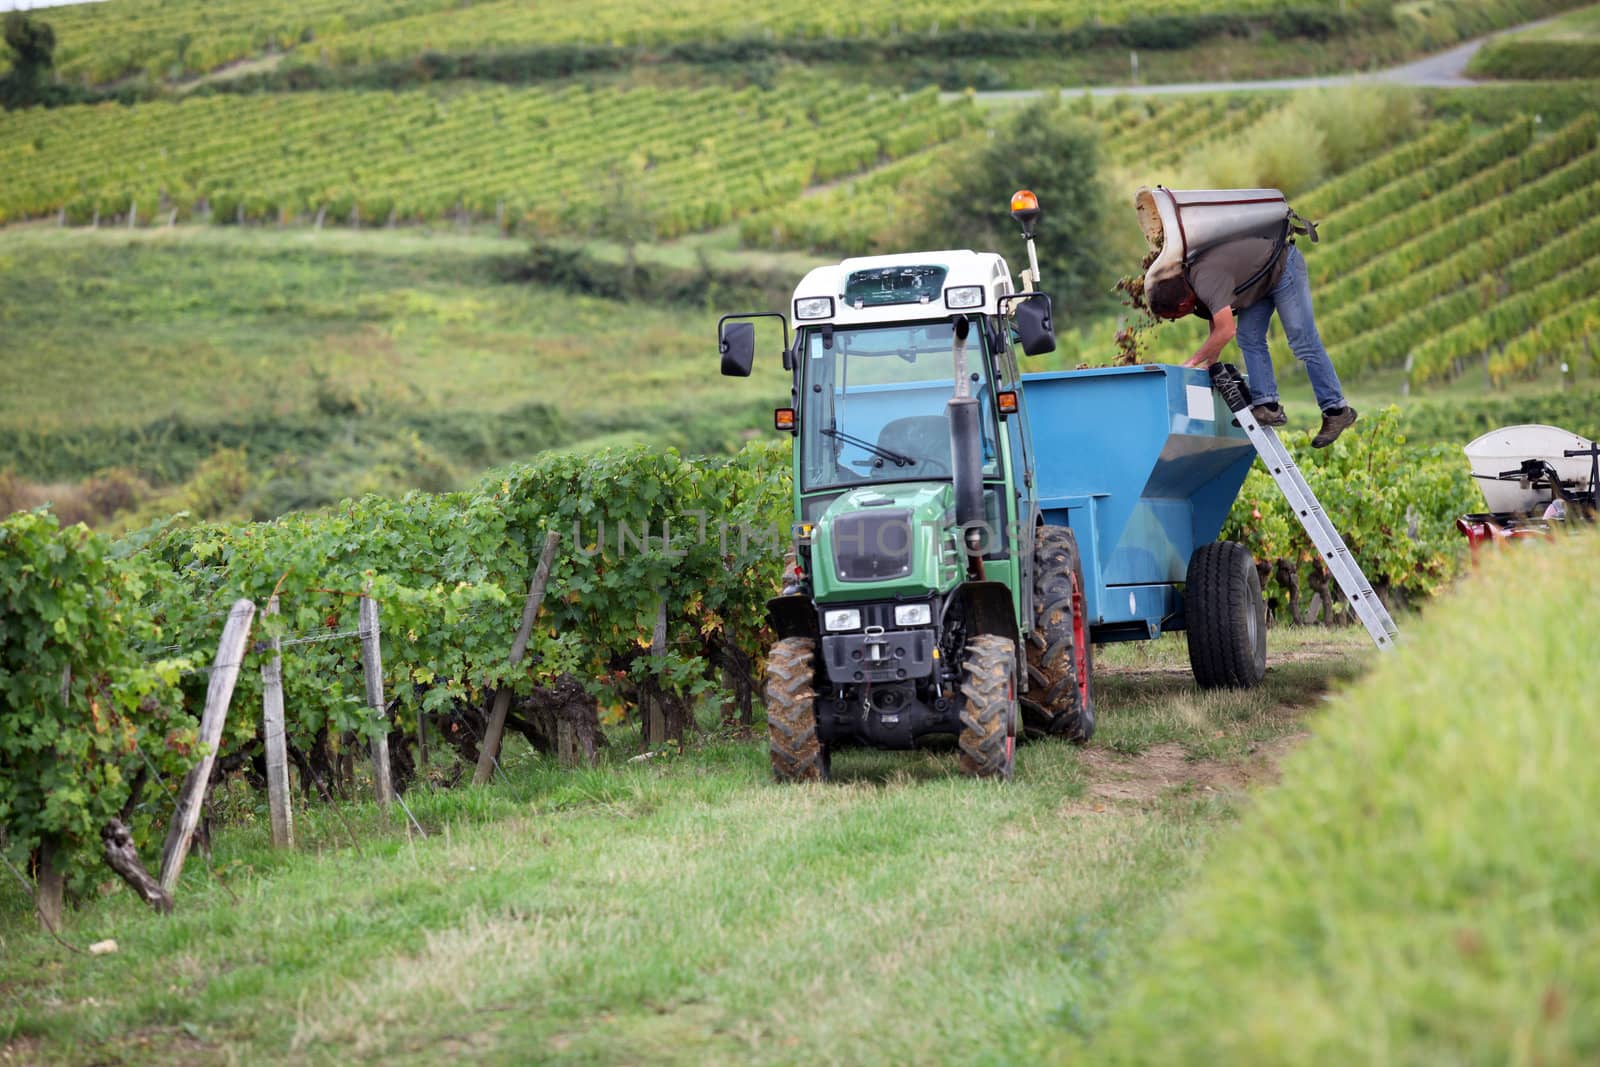 Tractor in vineyard by phovoir